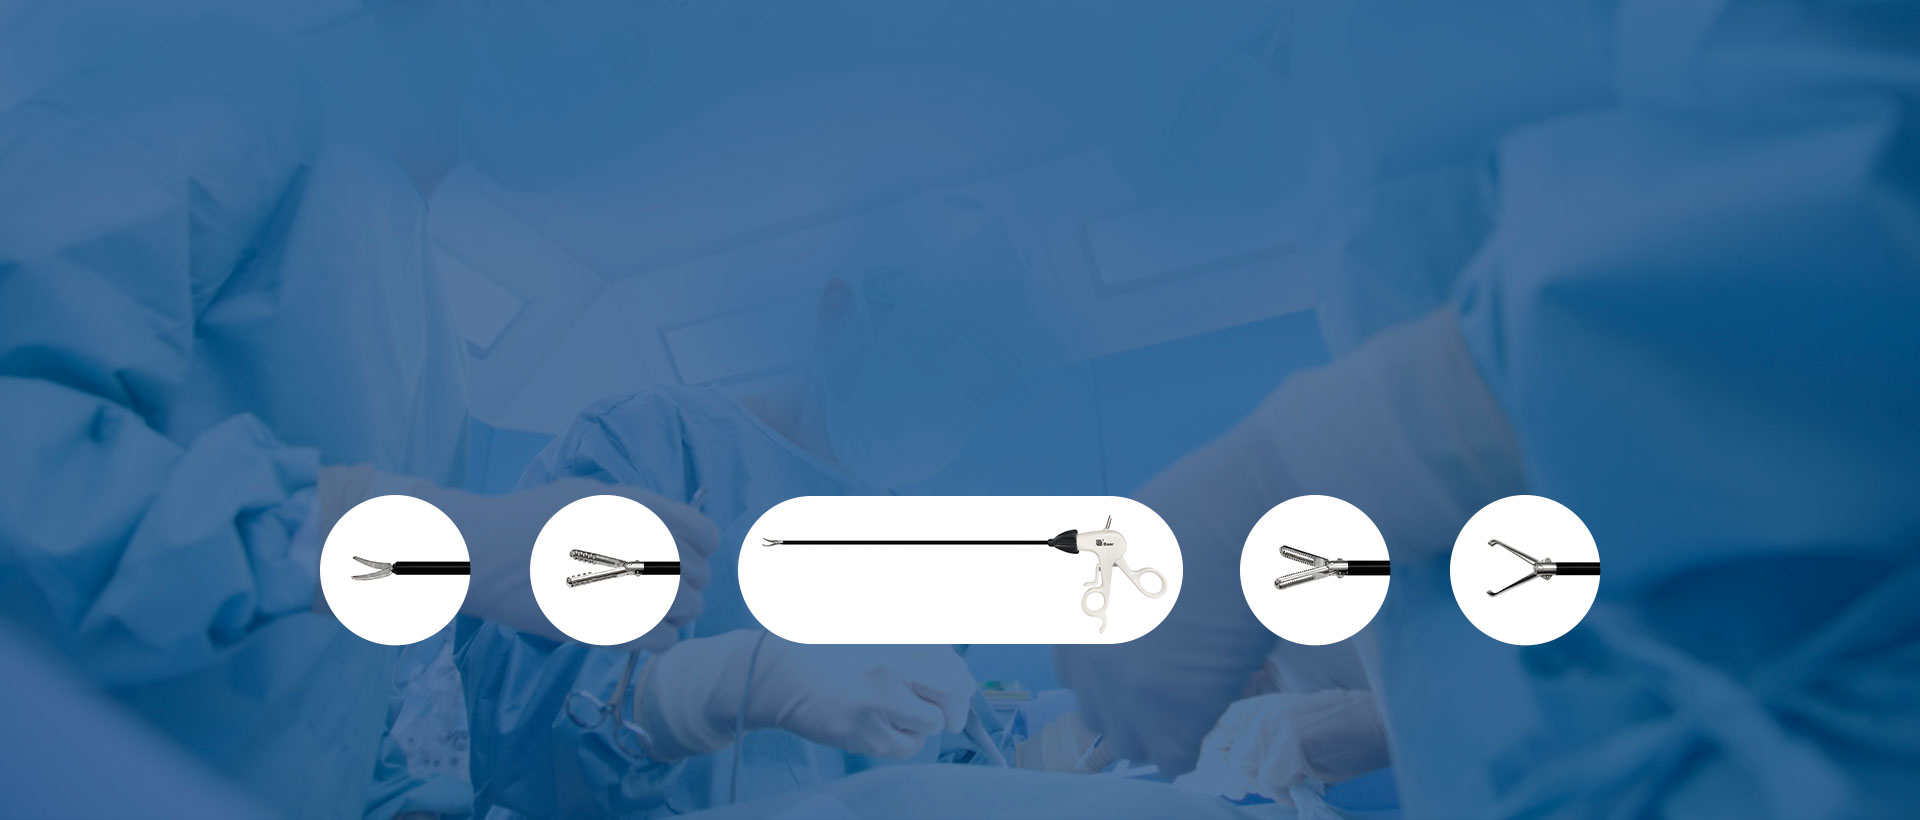 Hot Minimally Invasive Surgical Instruments